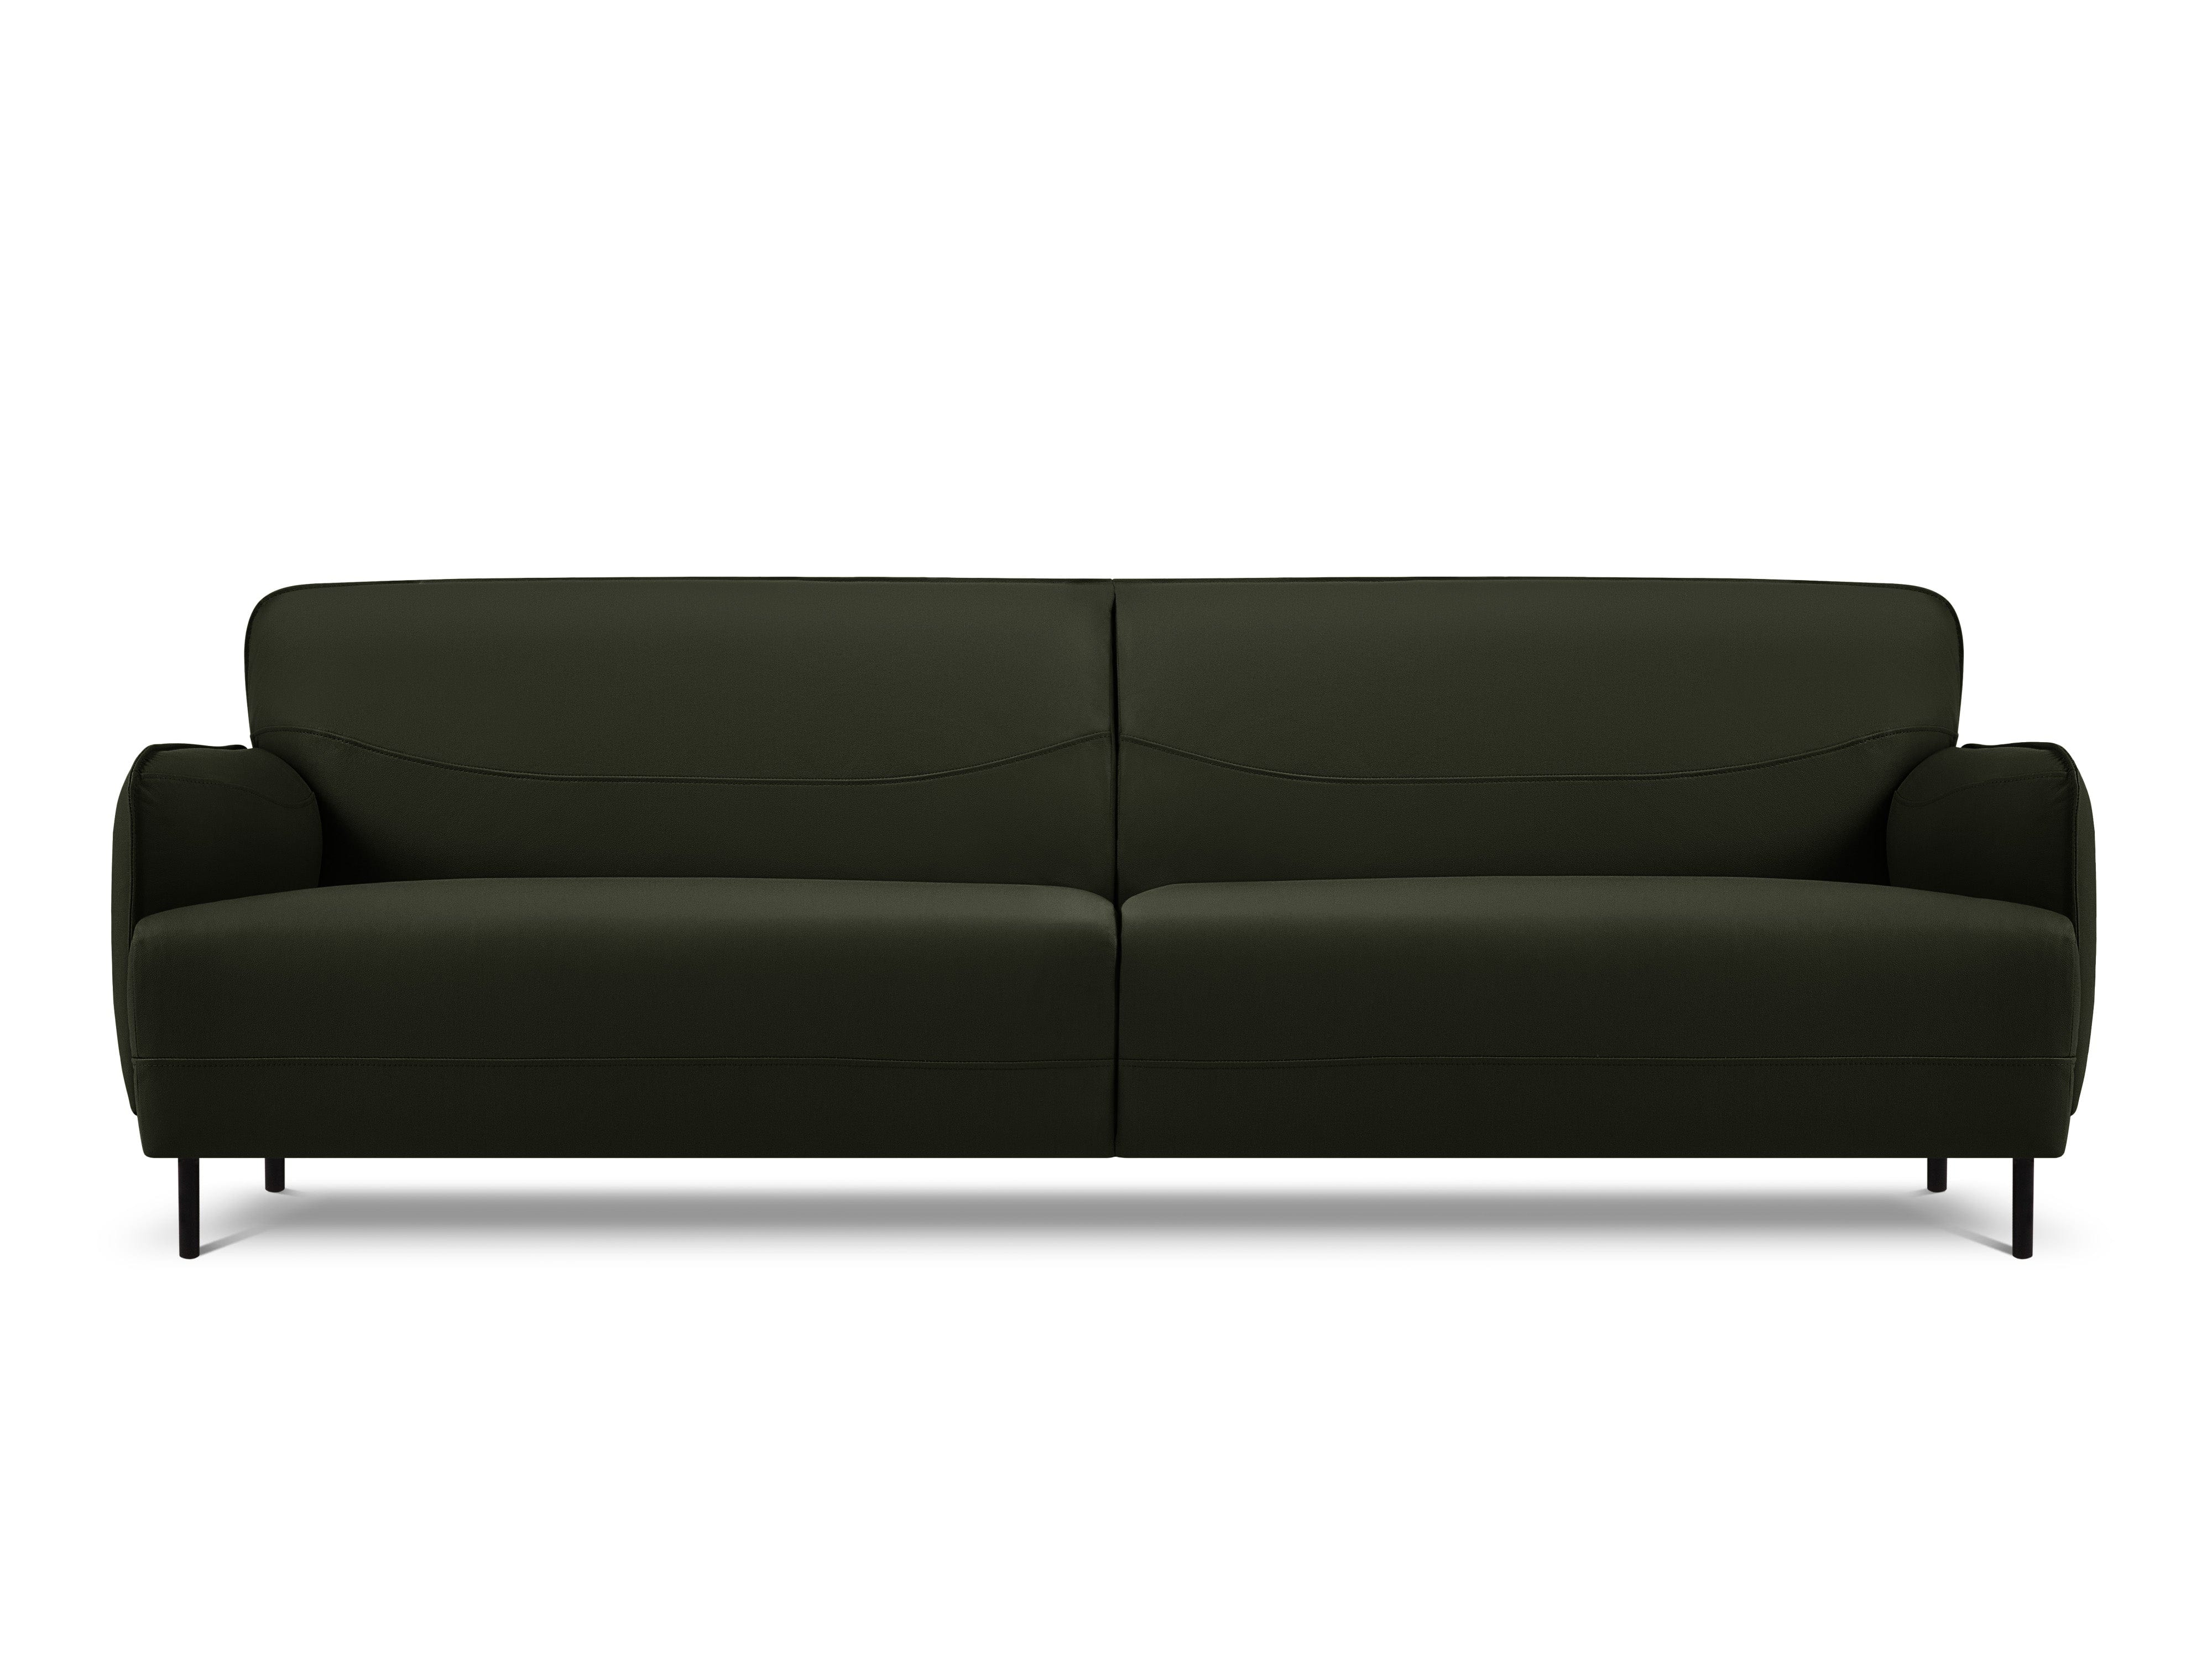 Genuine Leather Sofa, "Neso", 3 Seats, 235x90x76
 ,Green,Black Metal, Windsor & Co, Eye on Design